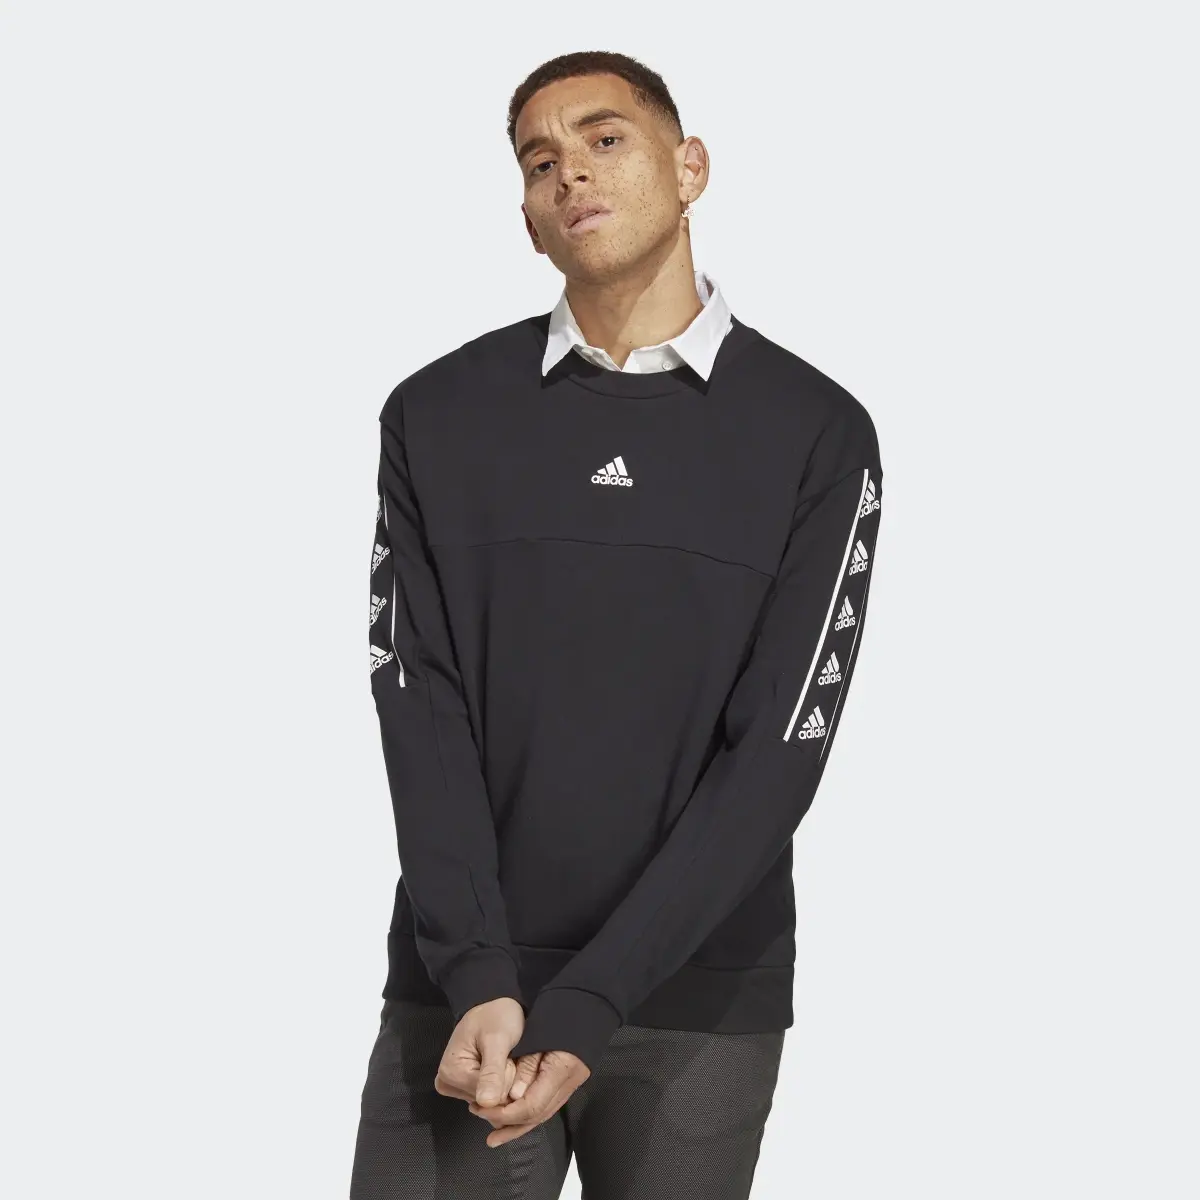 Adidas Brand Love Sweatshirt. 2